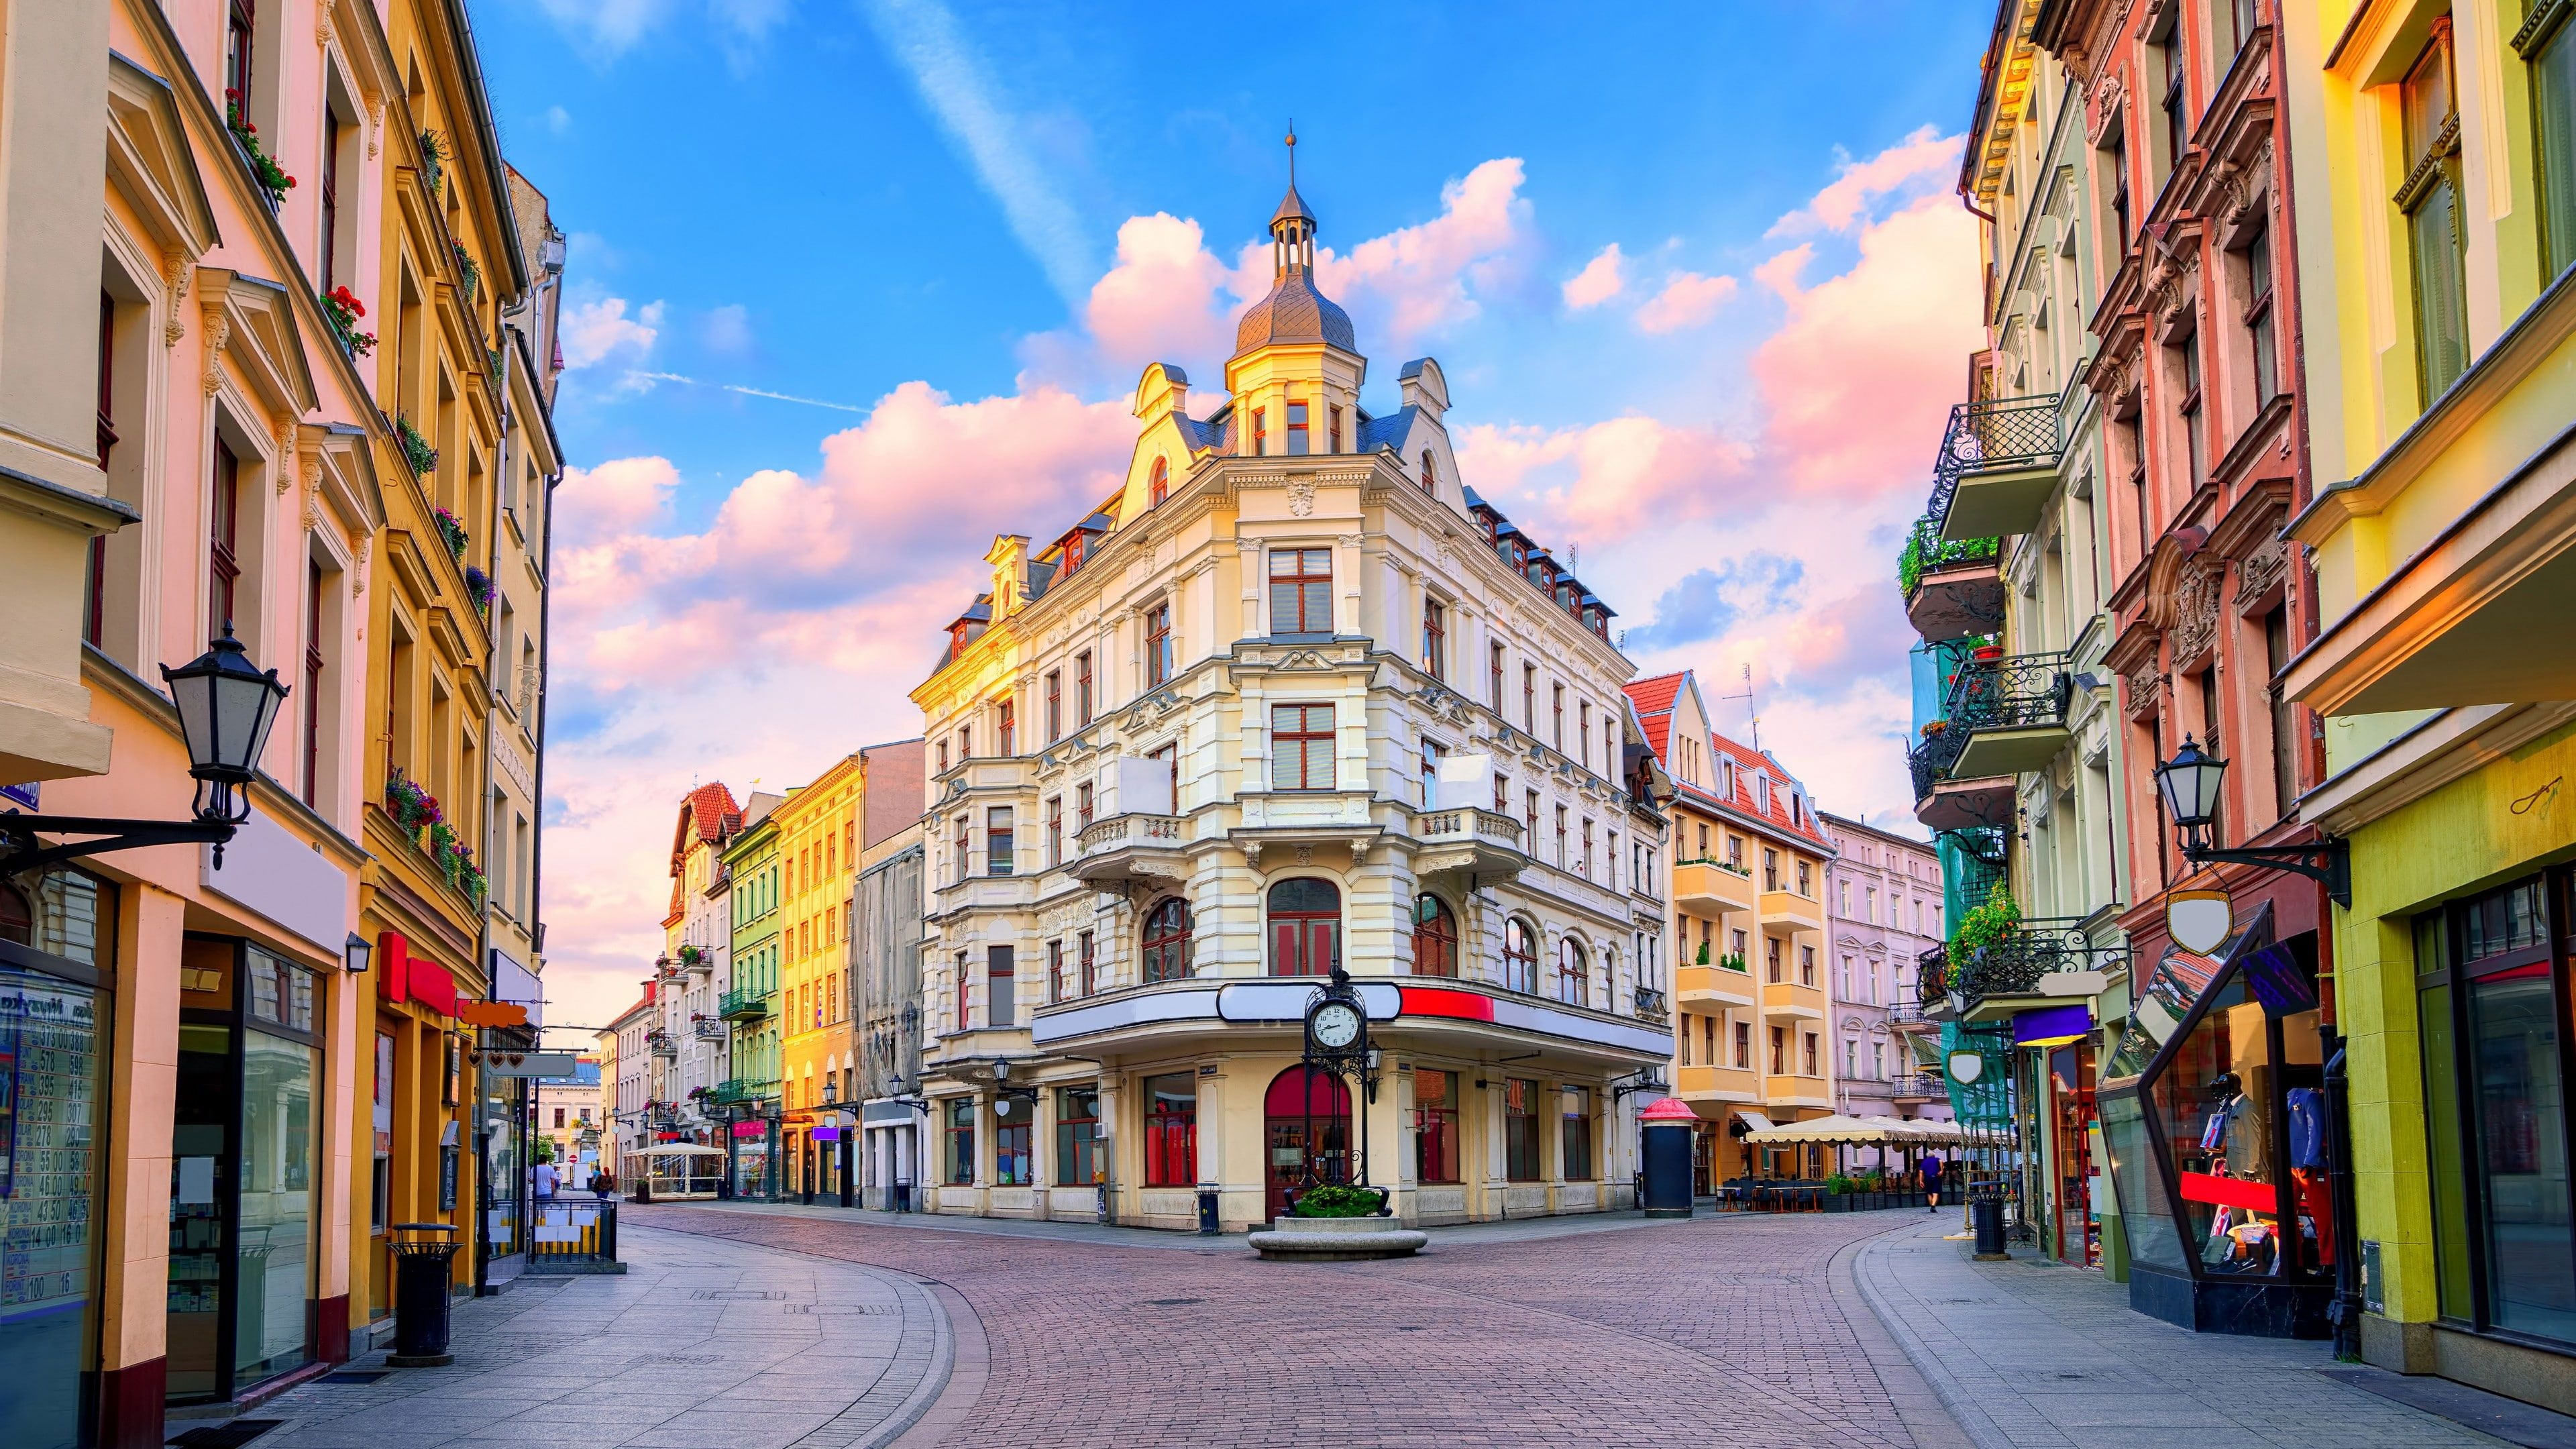 Europe travels, Old town square, Poland landscape, Historical beauty, 3840x2160 4K Desktop